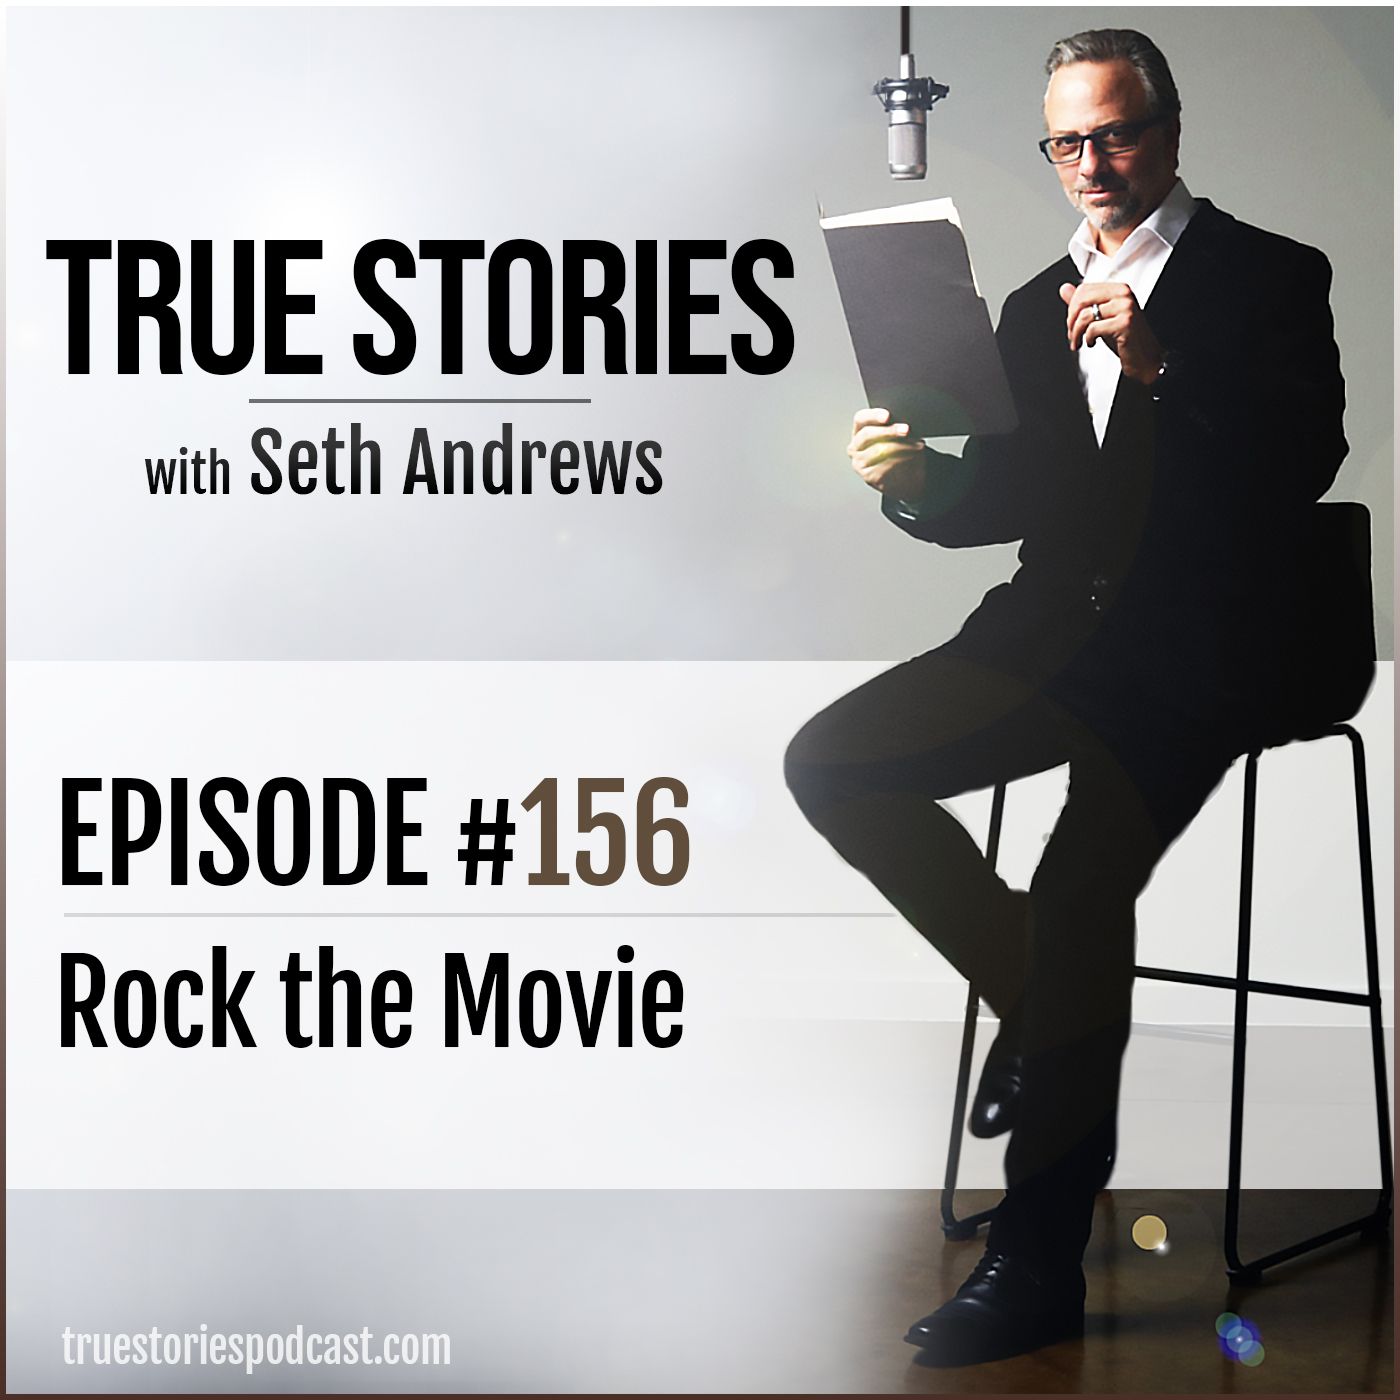 True Stories #156 - Rock the Movie